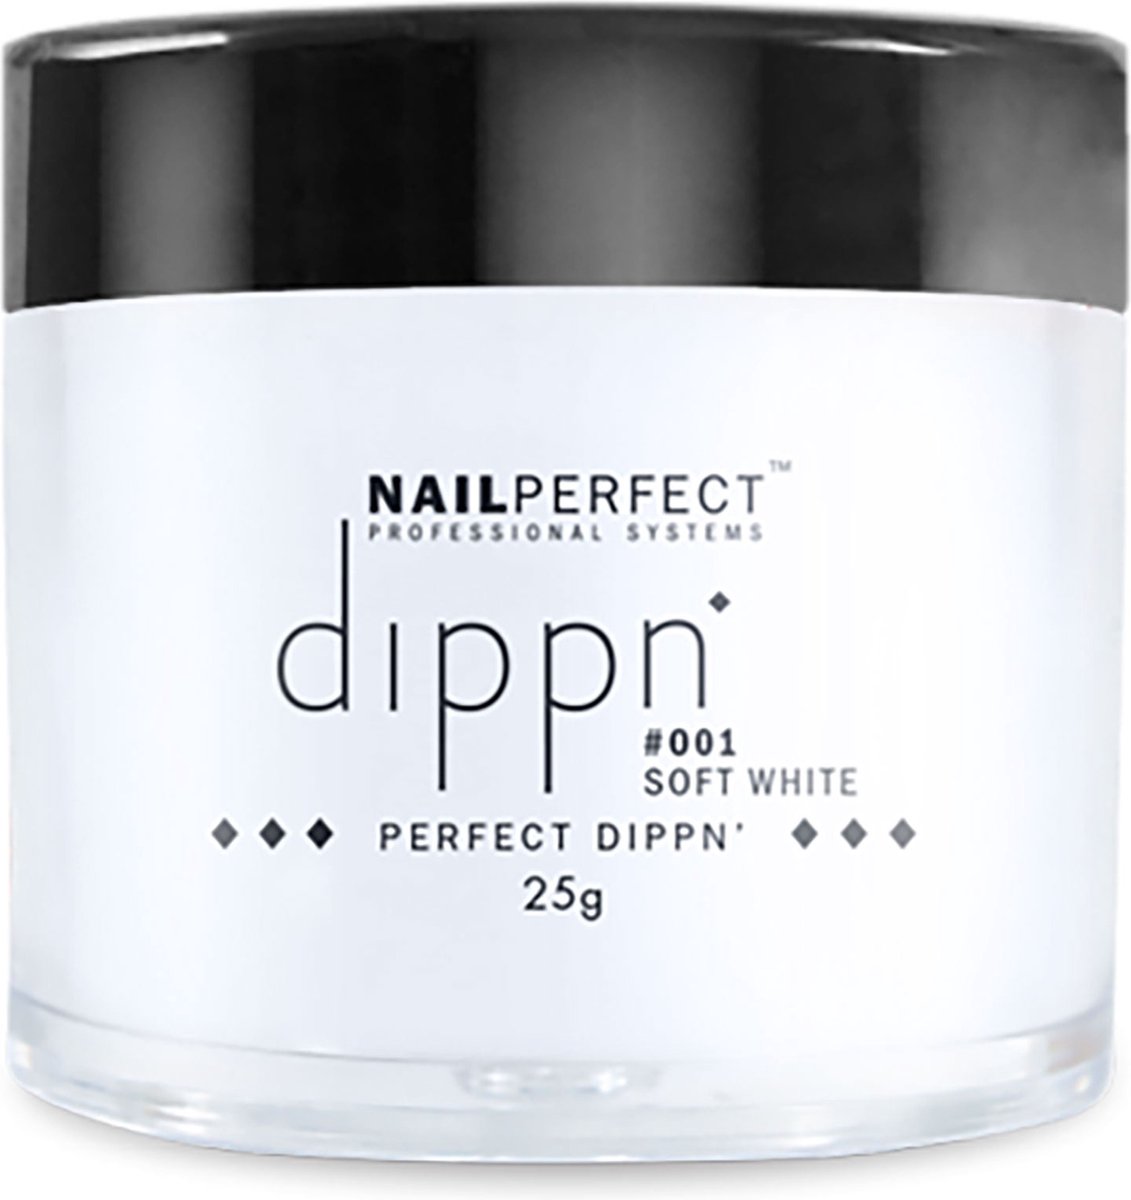 Nail Perfect - Dippn - #001 Soft White - 25gr